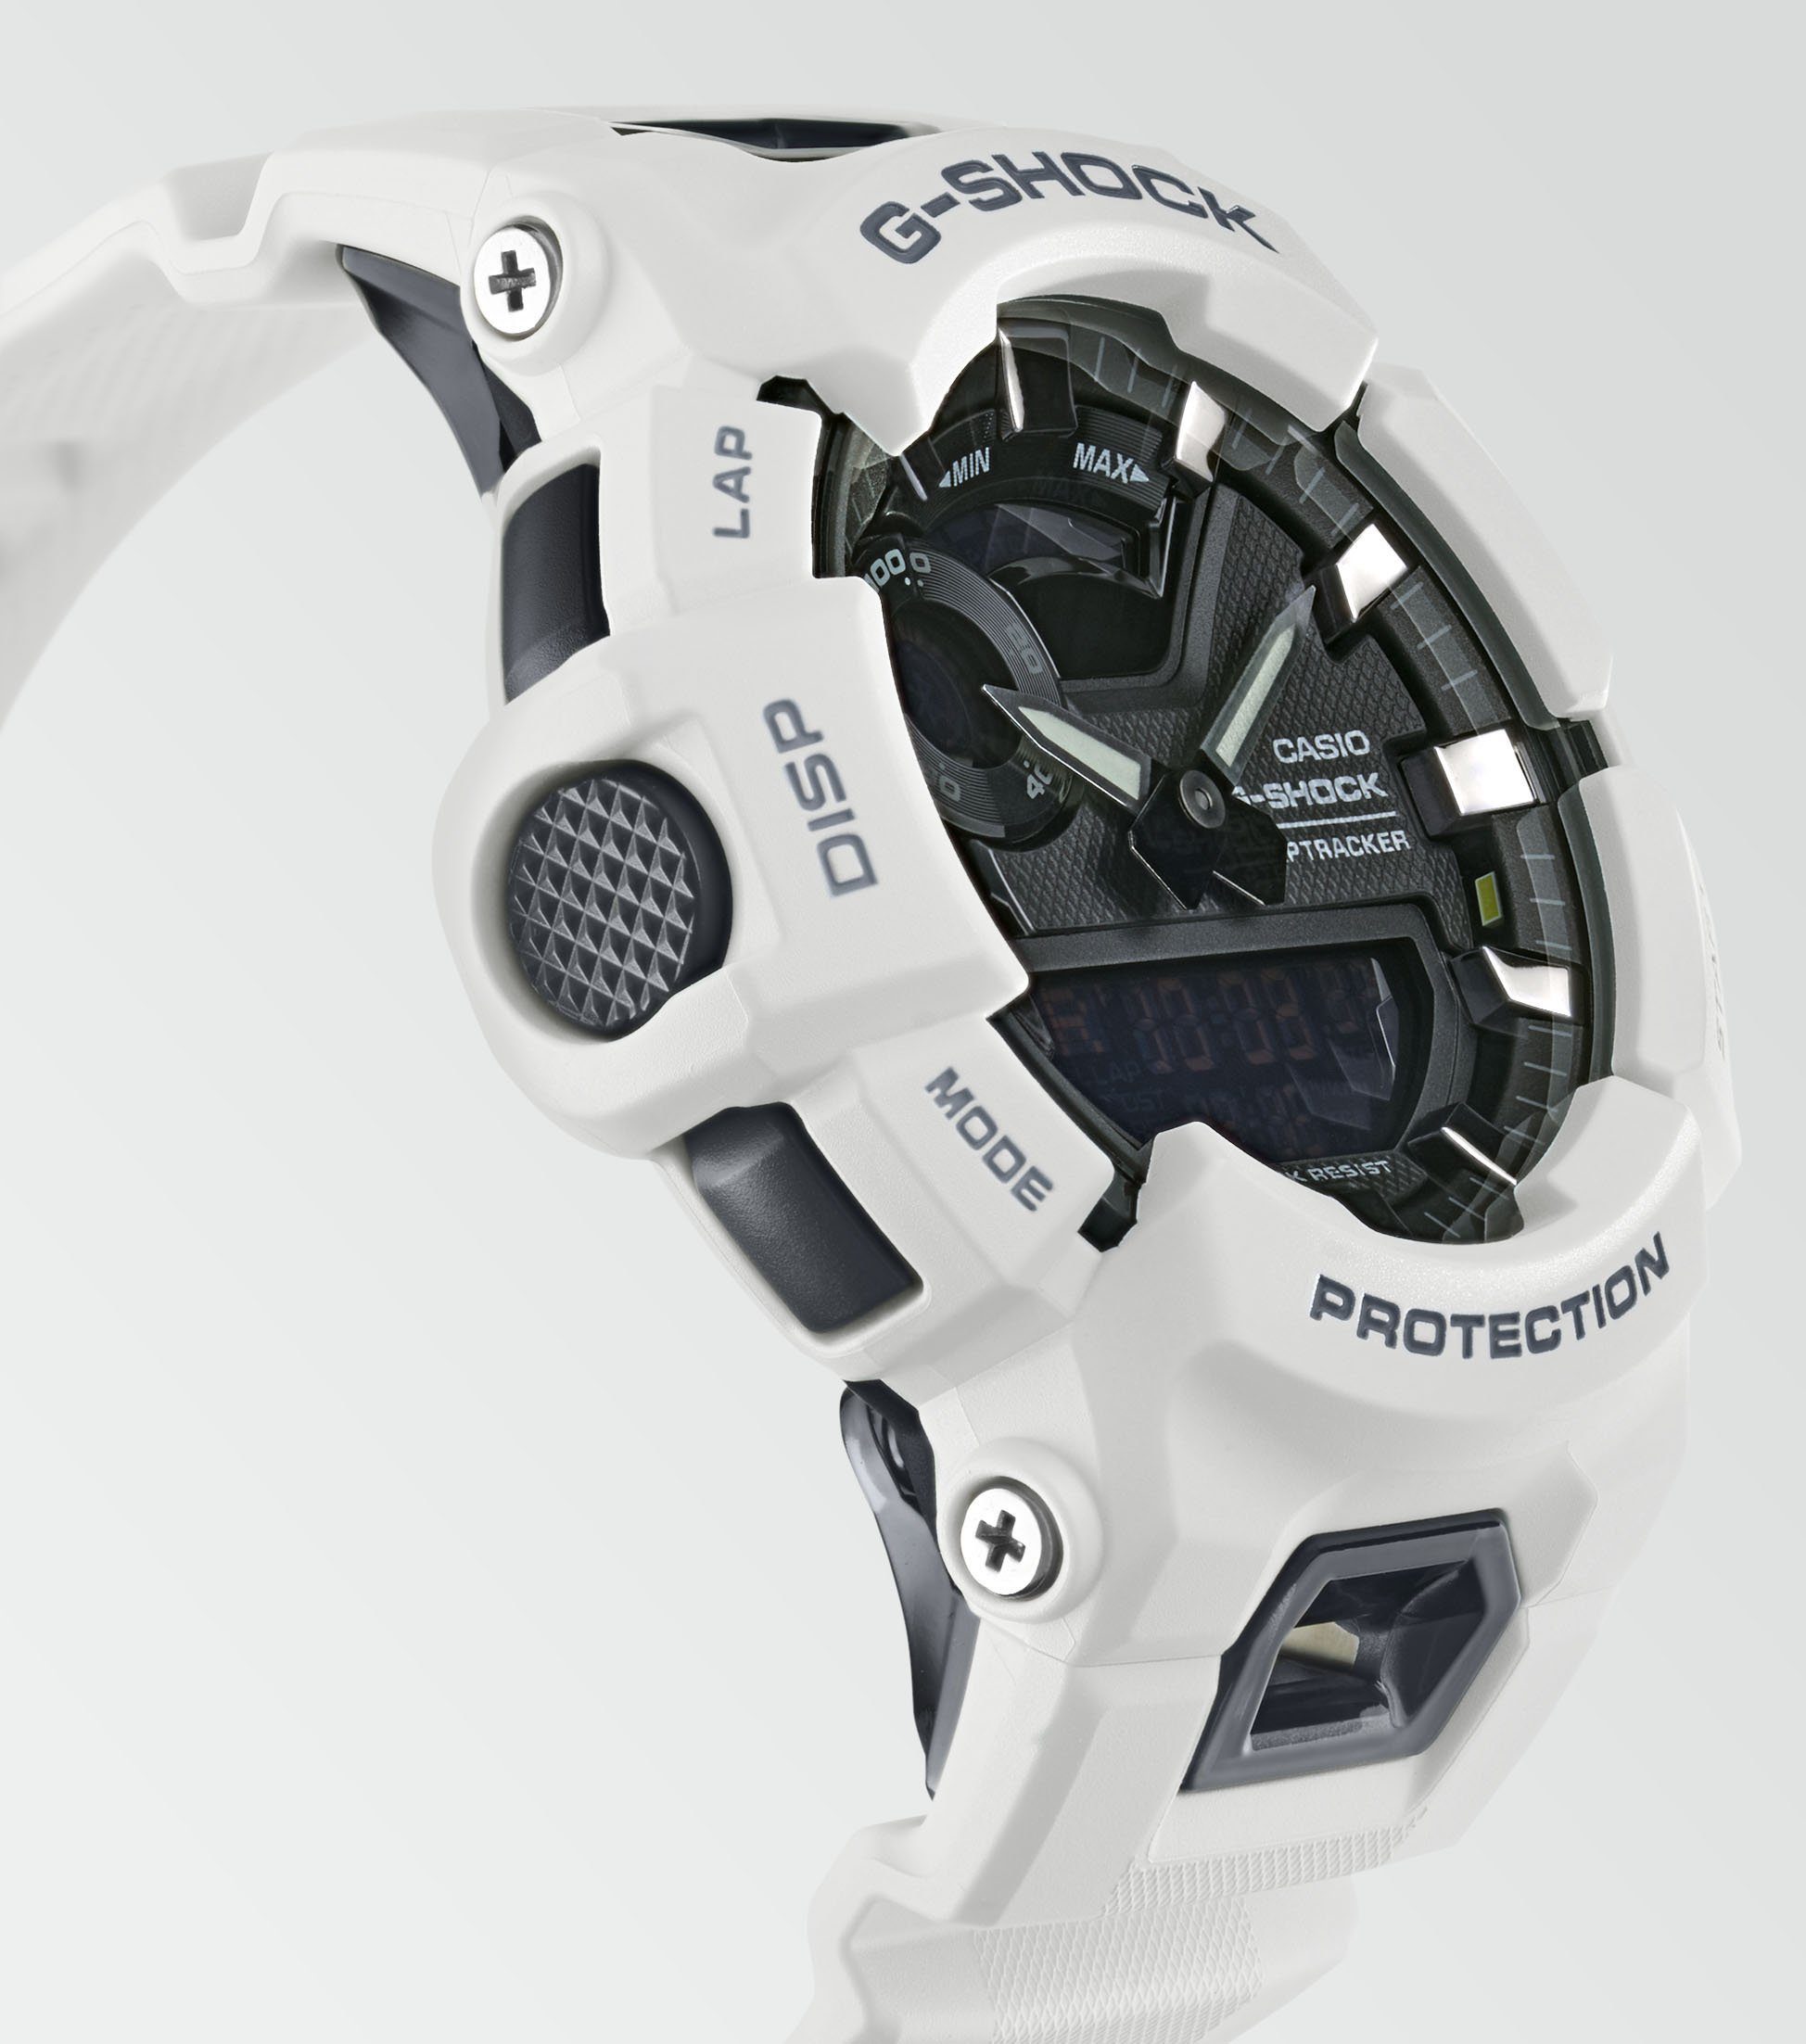 CASIO G-SHOCK Smartwatch GBA-900-7AER